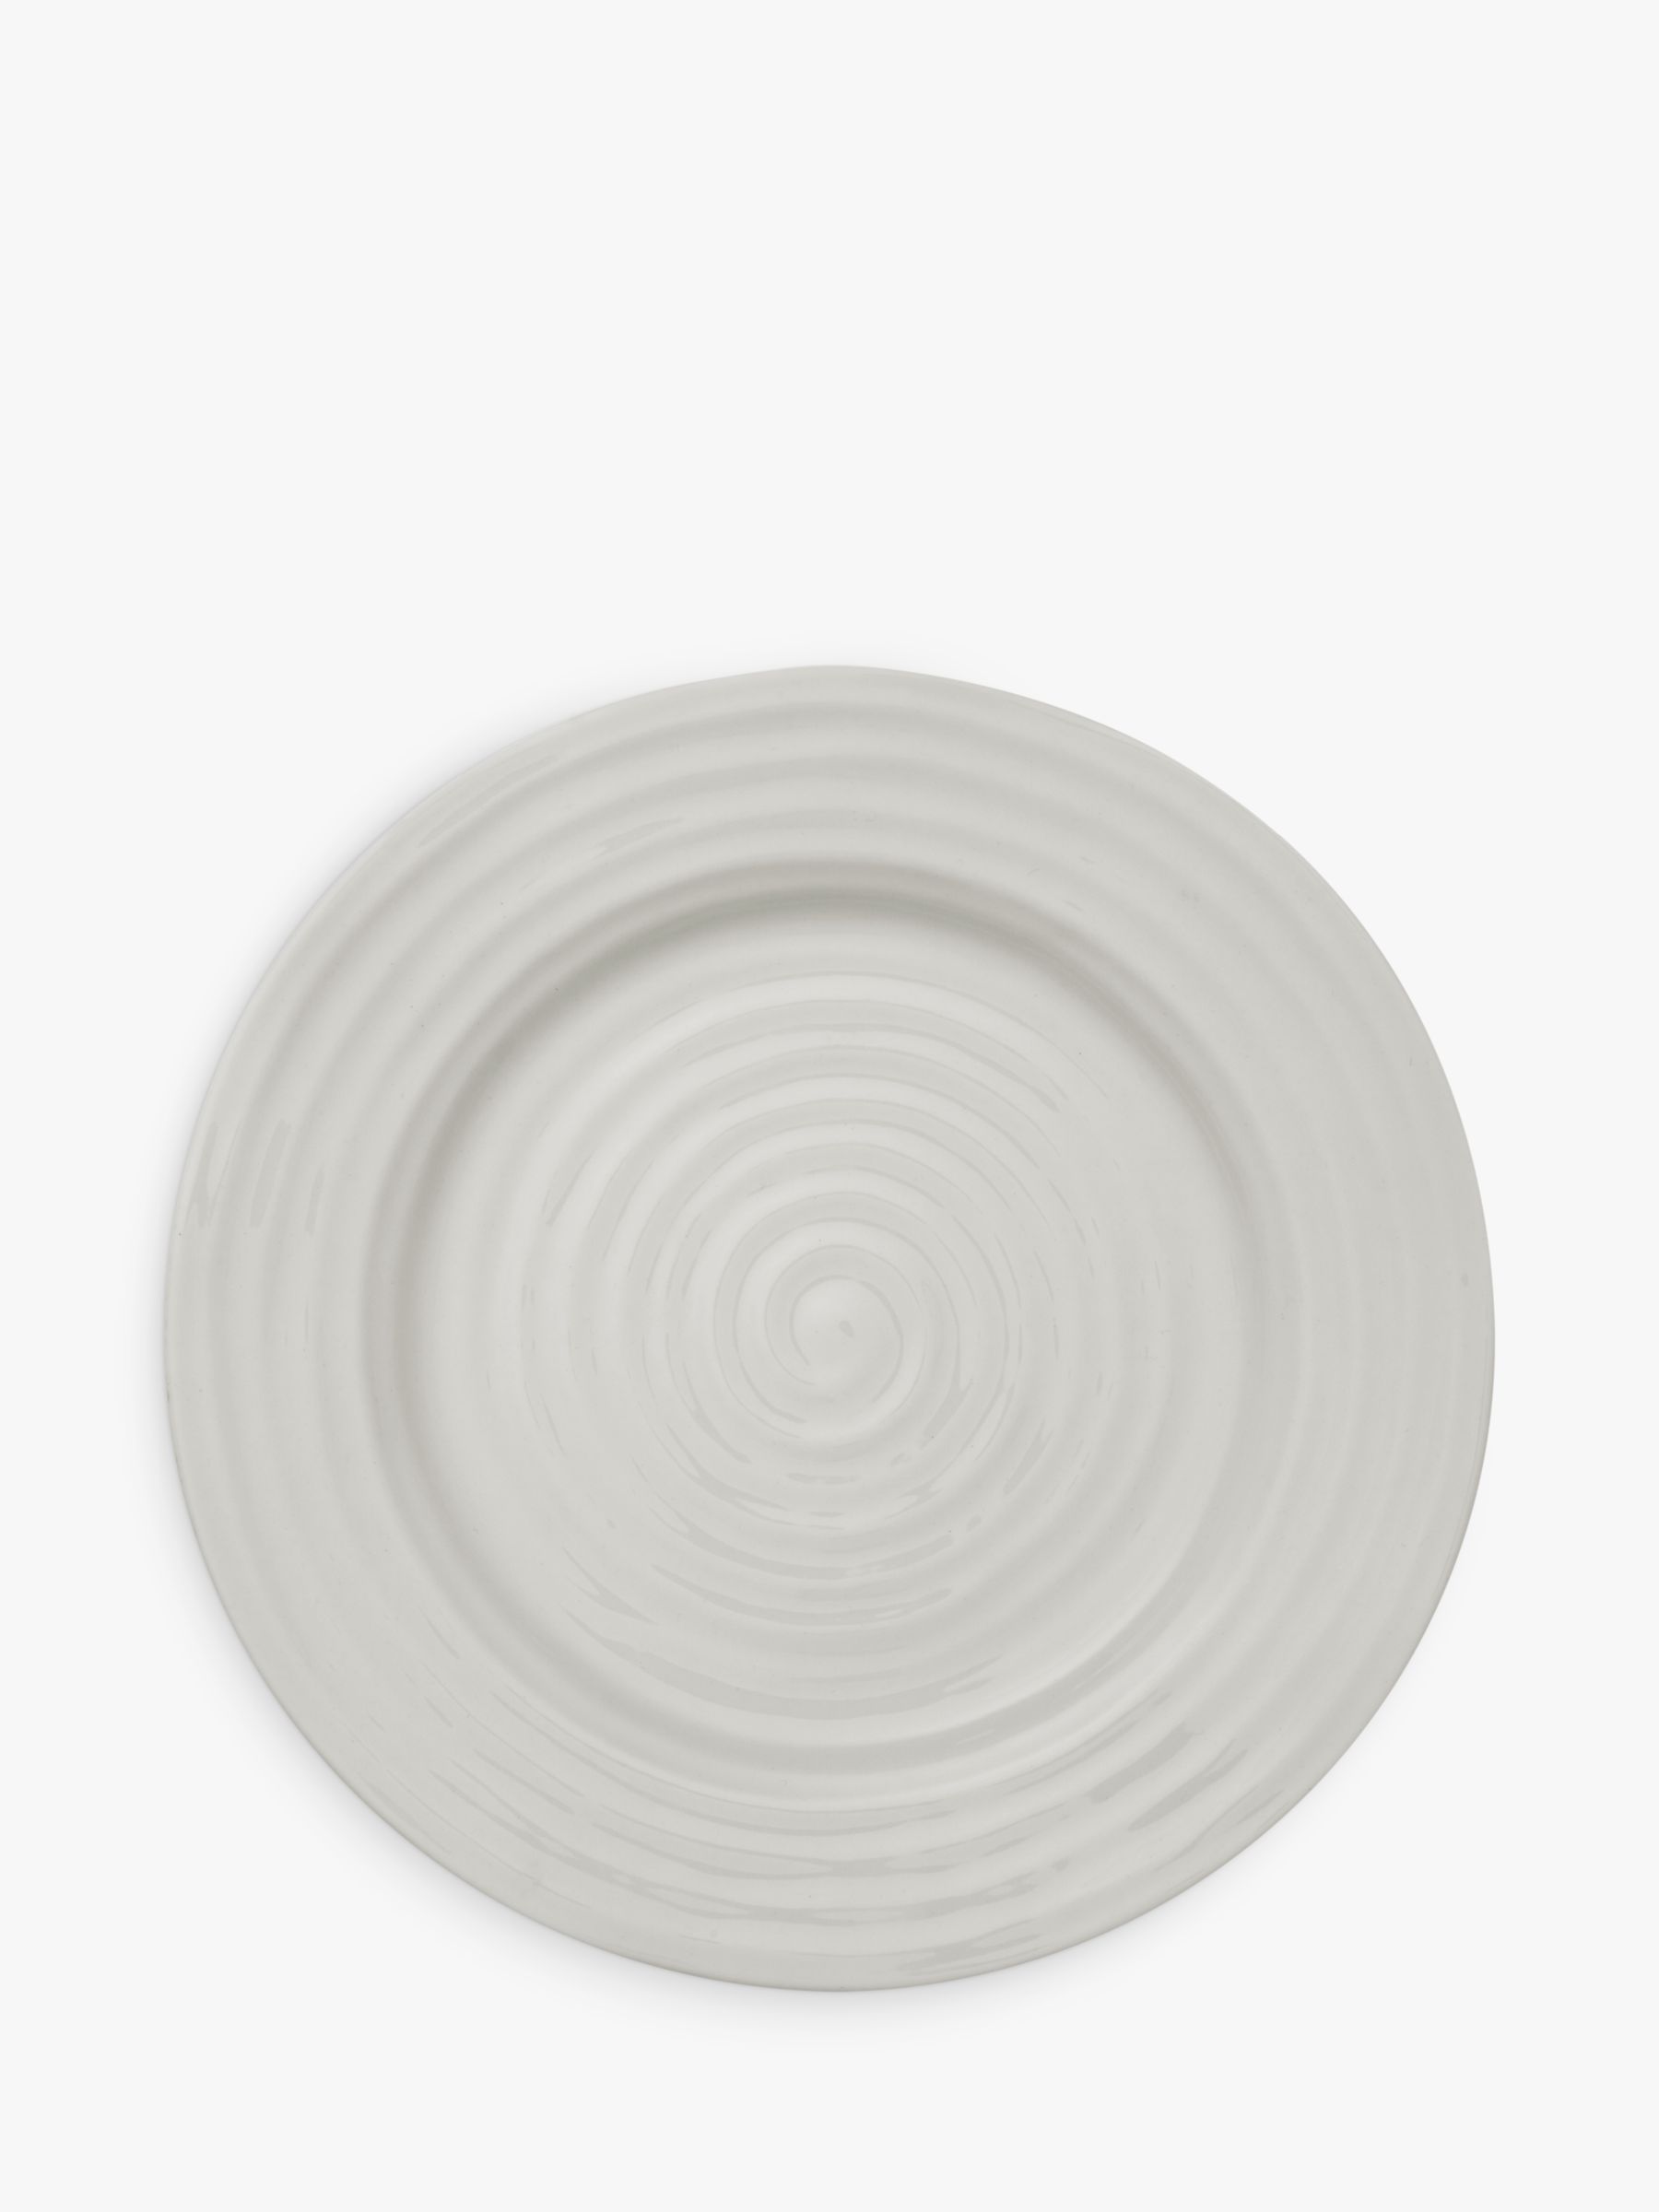 Sophie Conran for Portmeirion Dessert Plate, White, 20.5cm